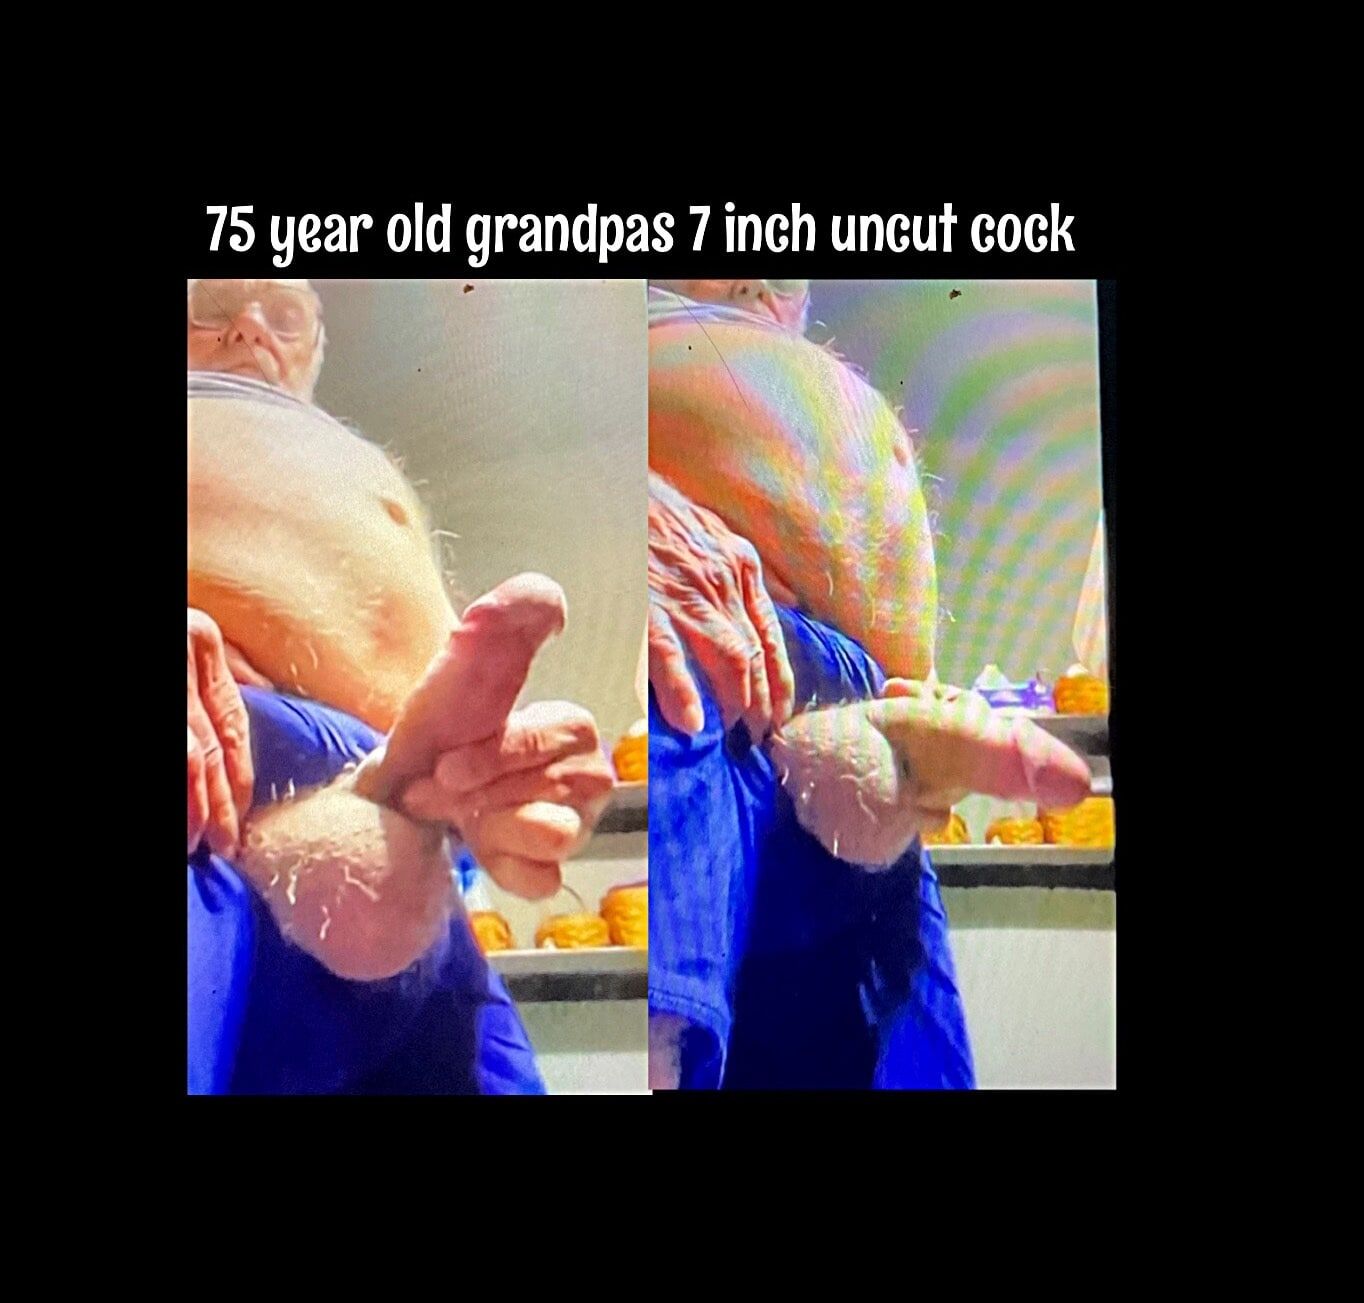 Grandpas 7 inch uncut thick cock